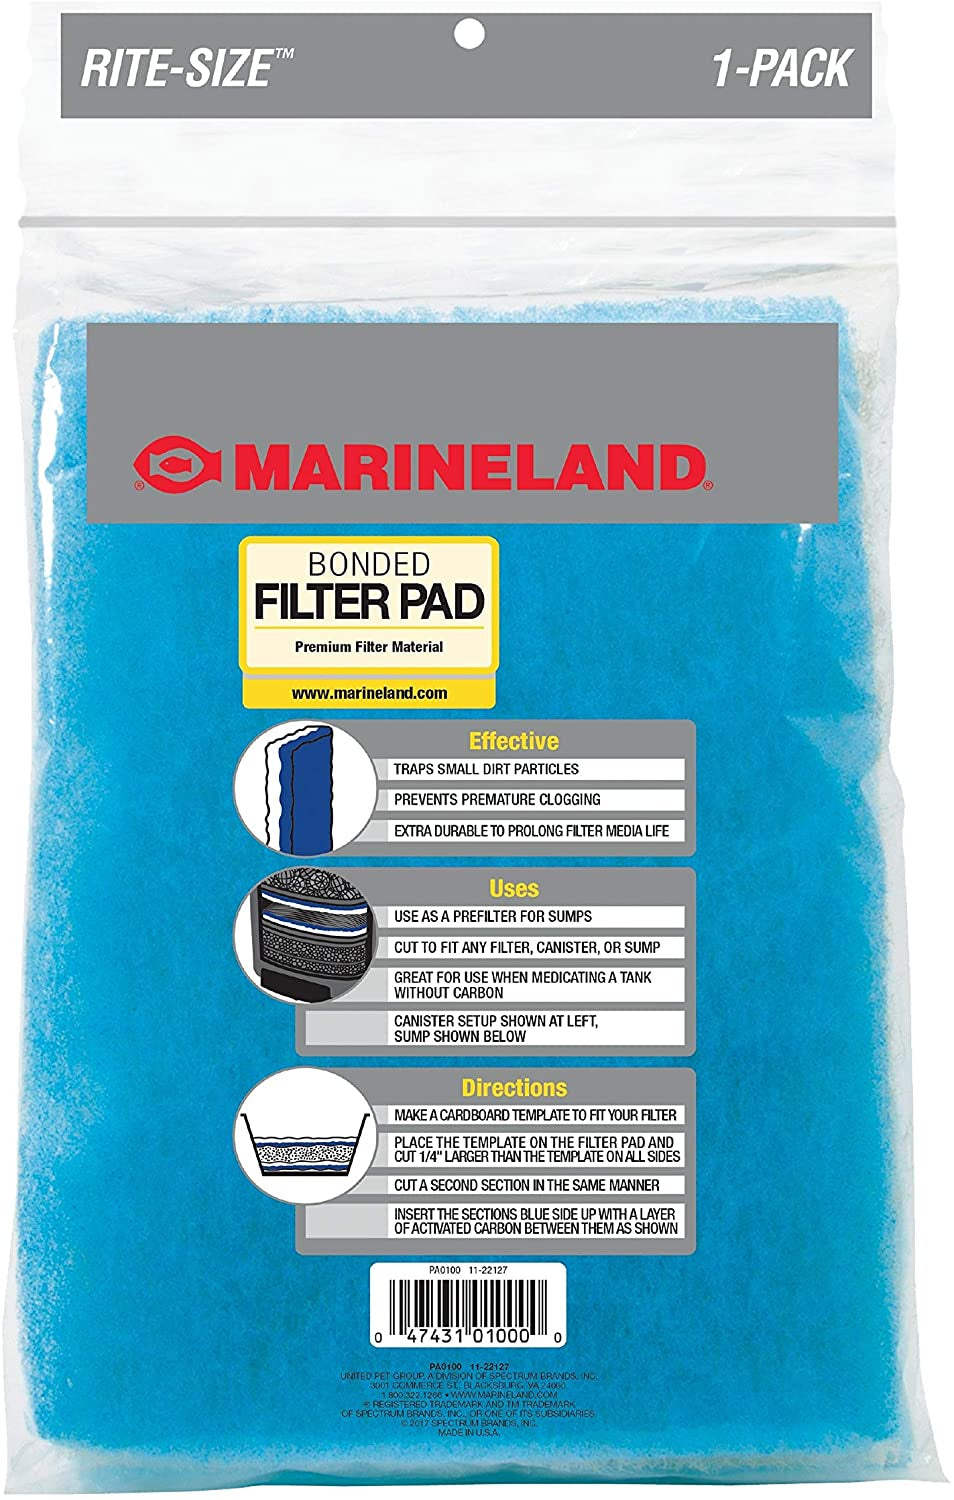 Marineland Rite-Size Bonded Filter Pad - PetMountain.com